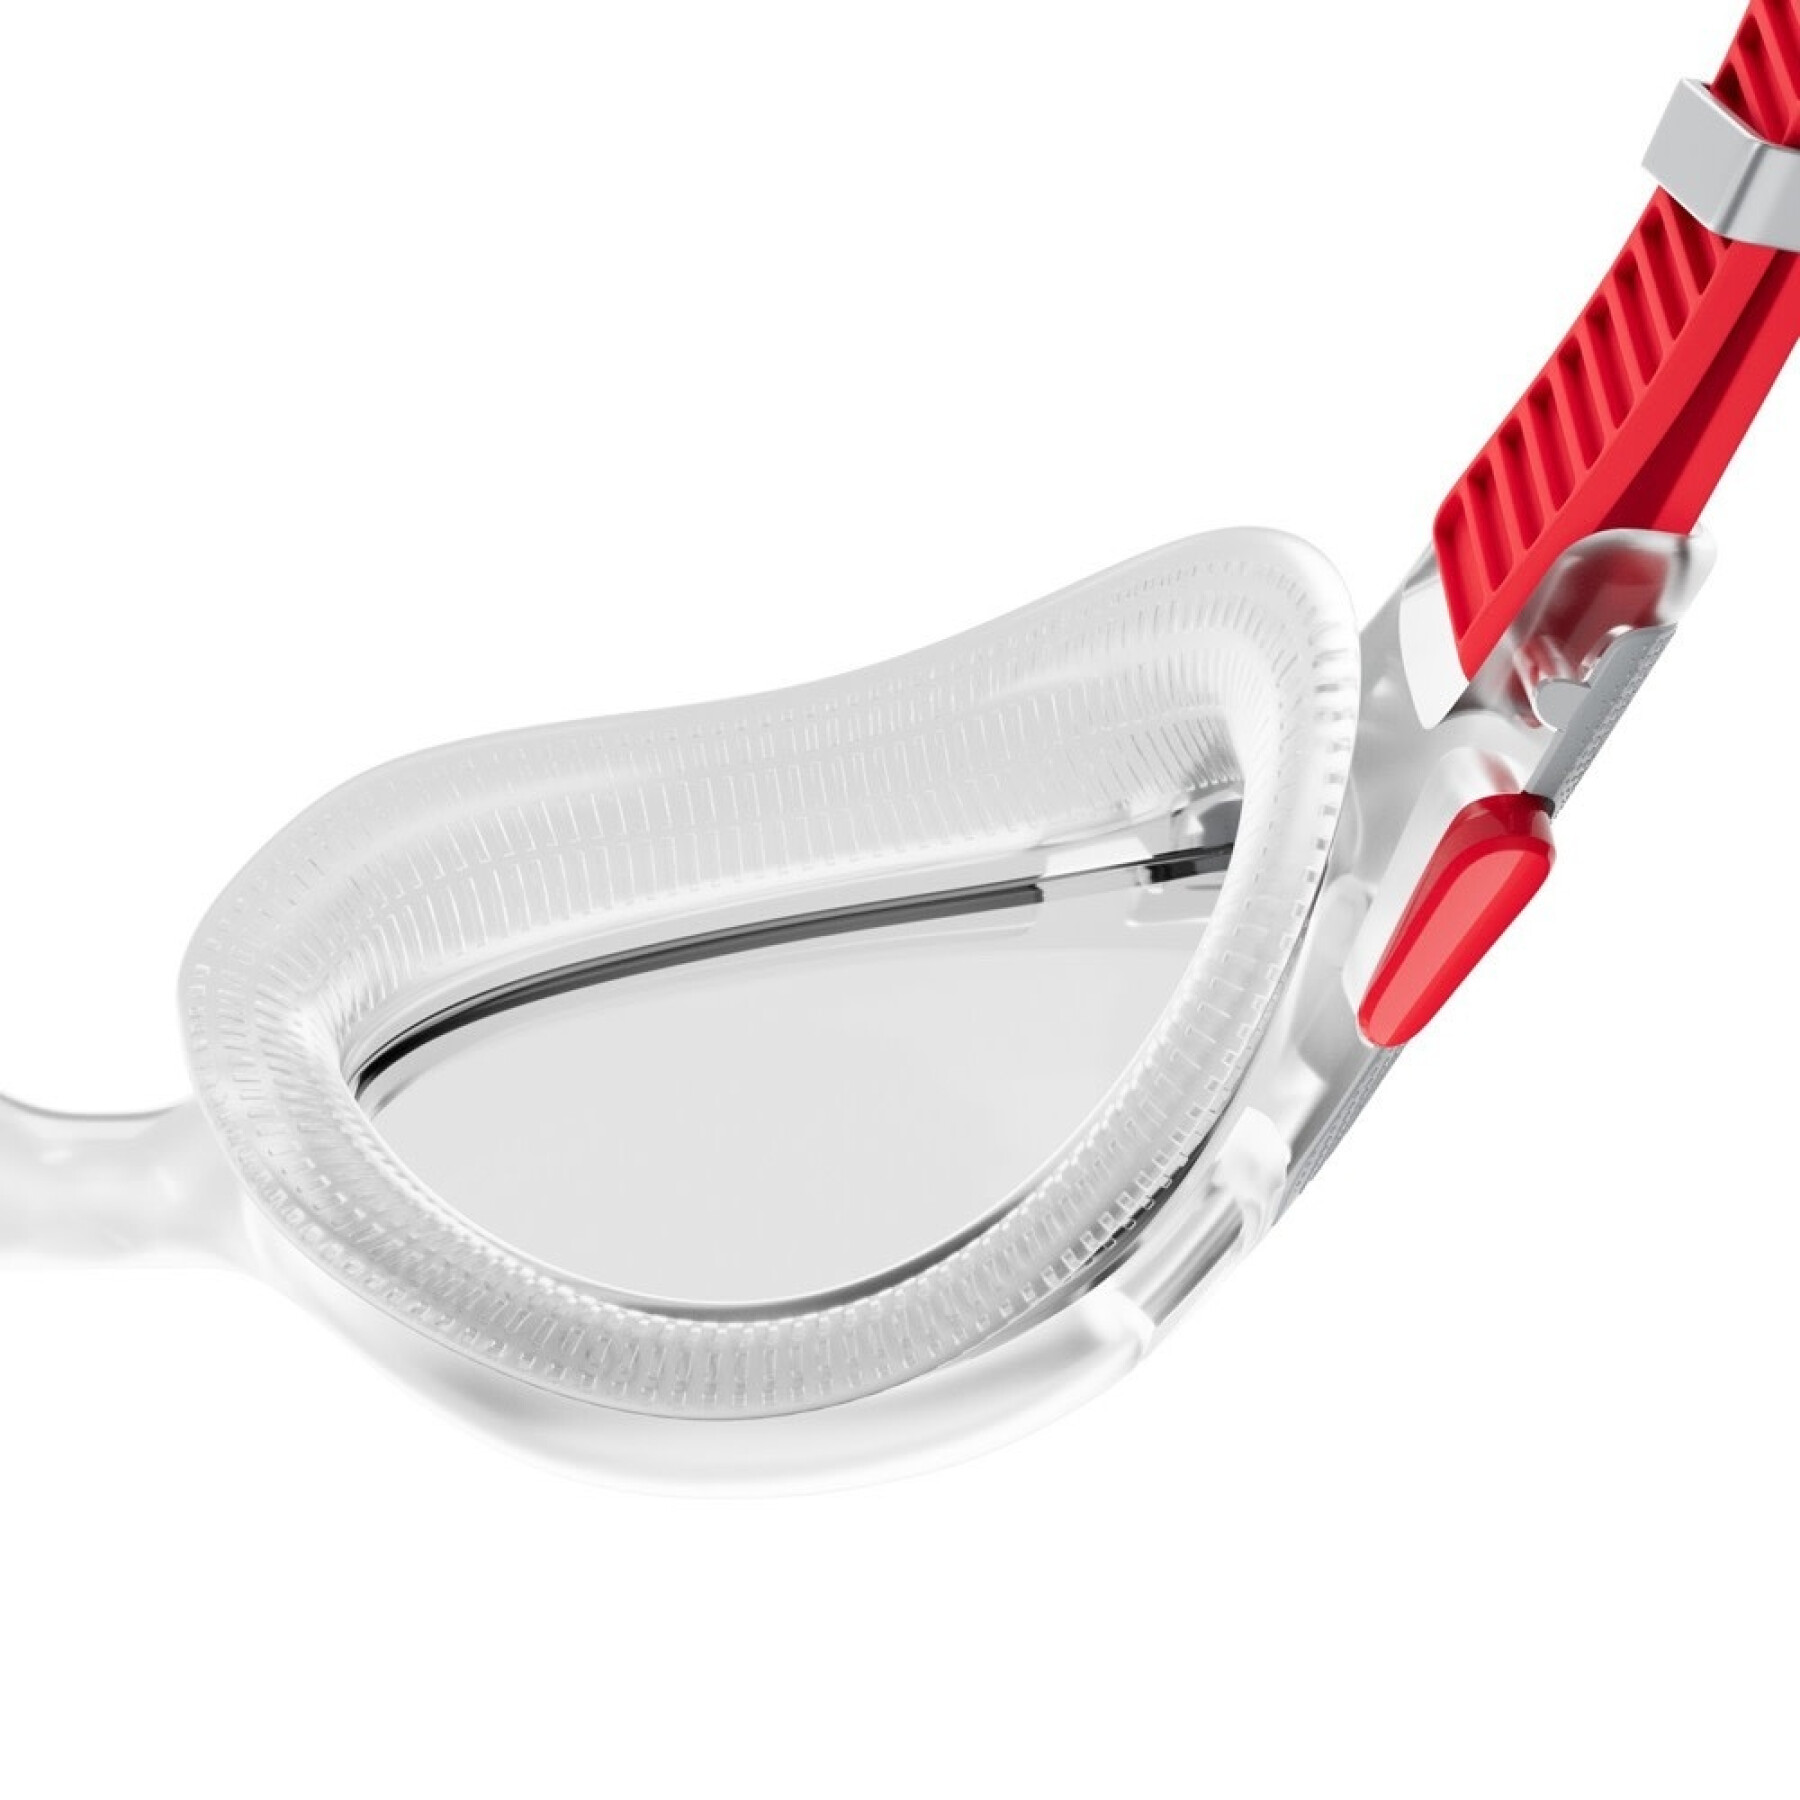 Swimming goggles Speedo Biofuse 2.0